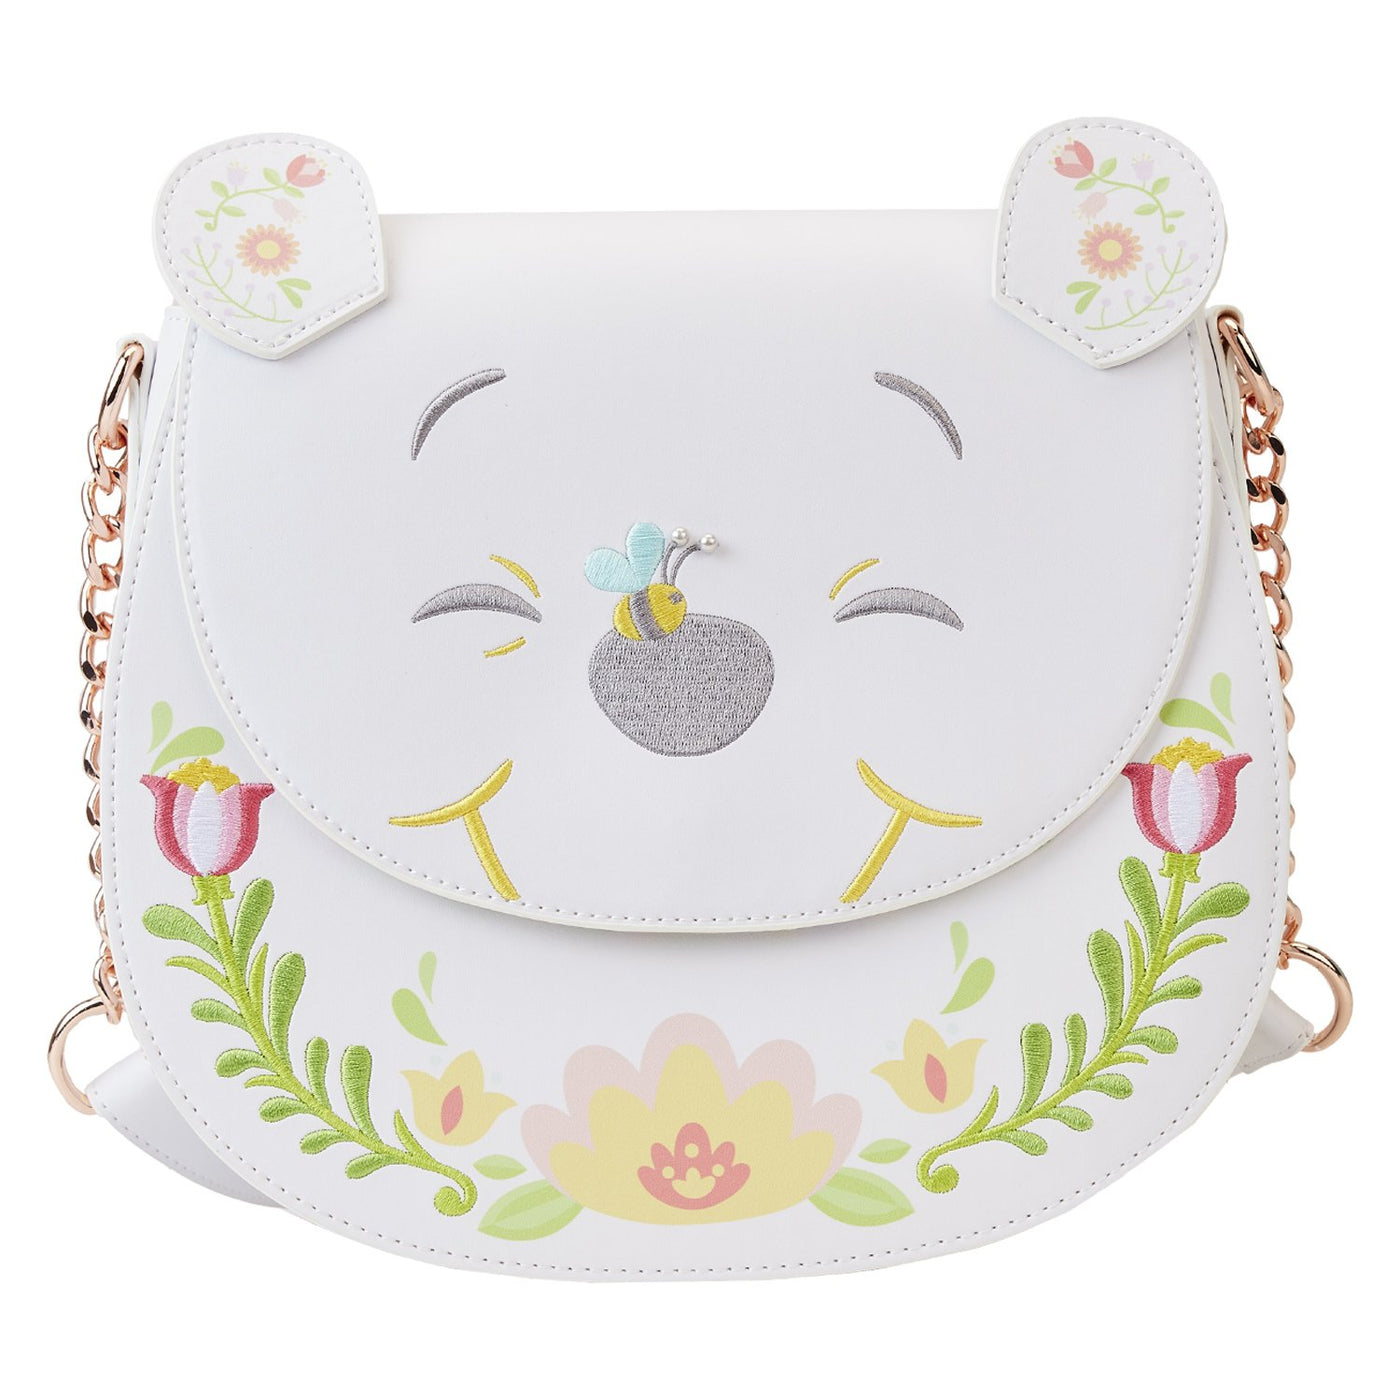  Loungefly Disney Winnie The Pooh Flowers Mini Backpack